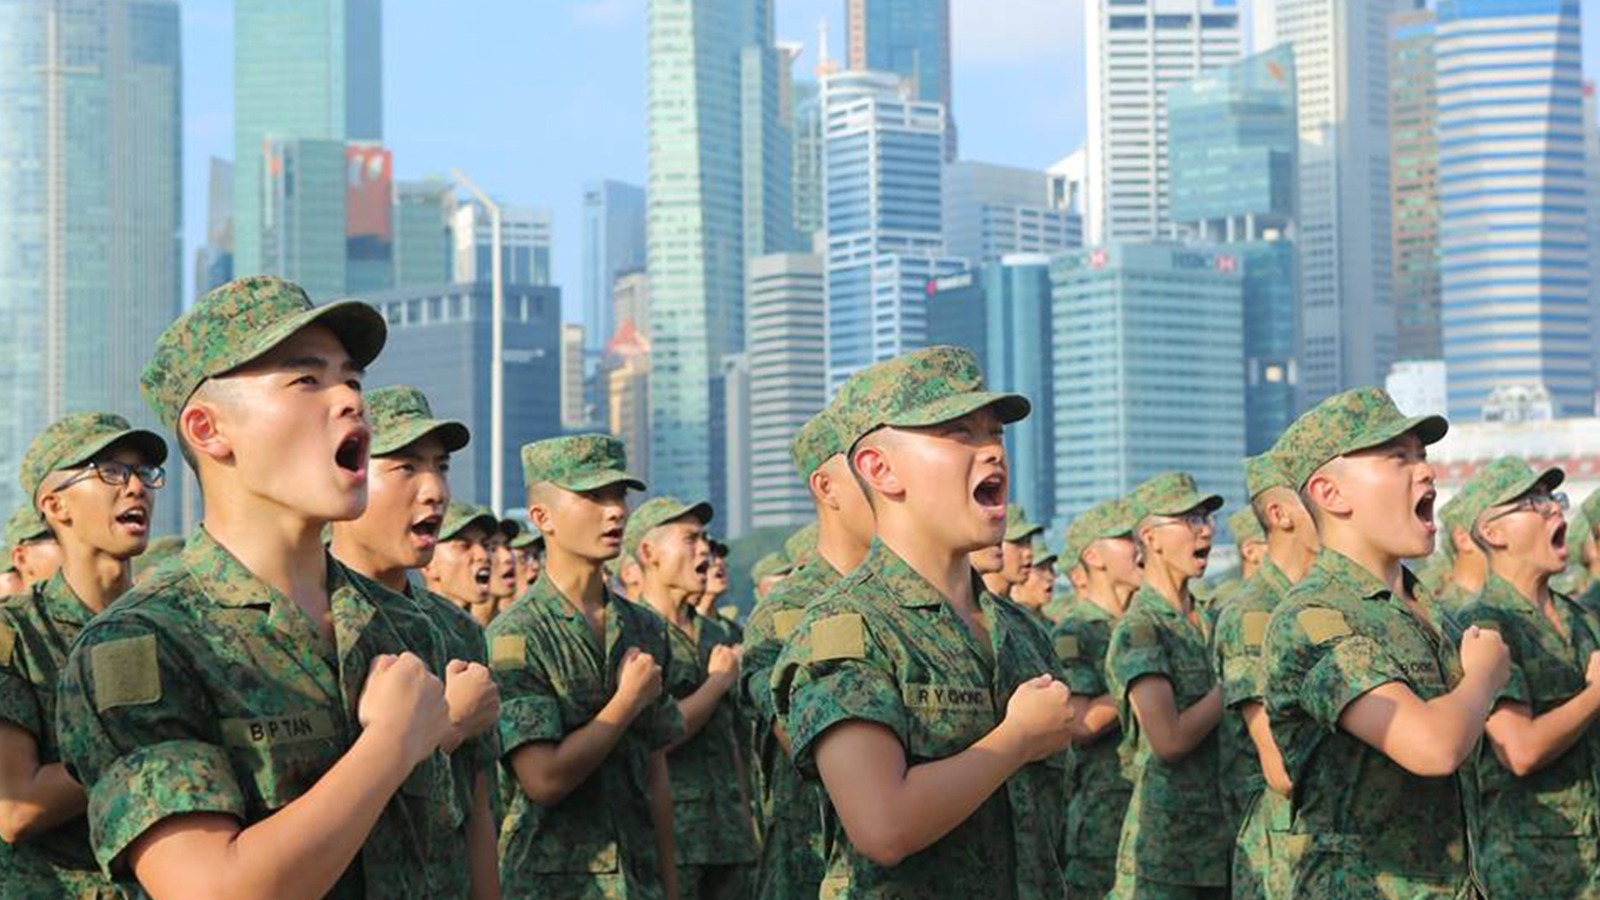 soldier, army, recruit, singapore, skm, pride, kindness